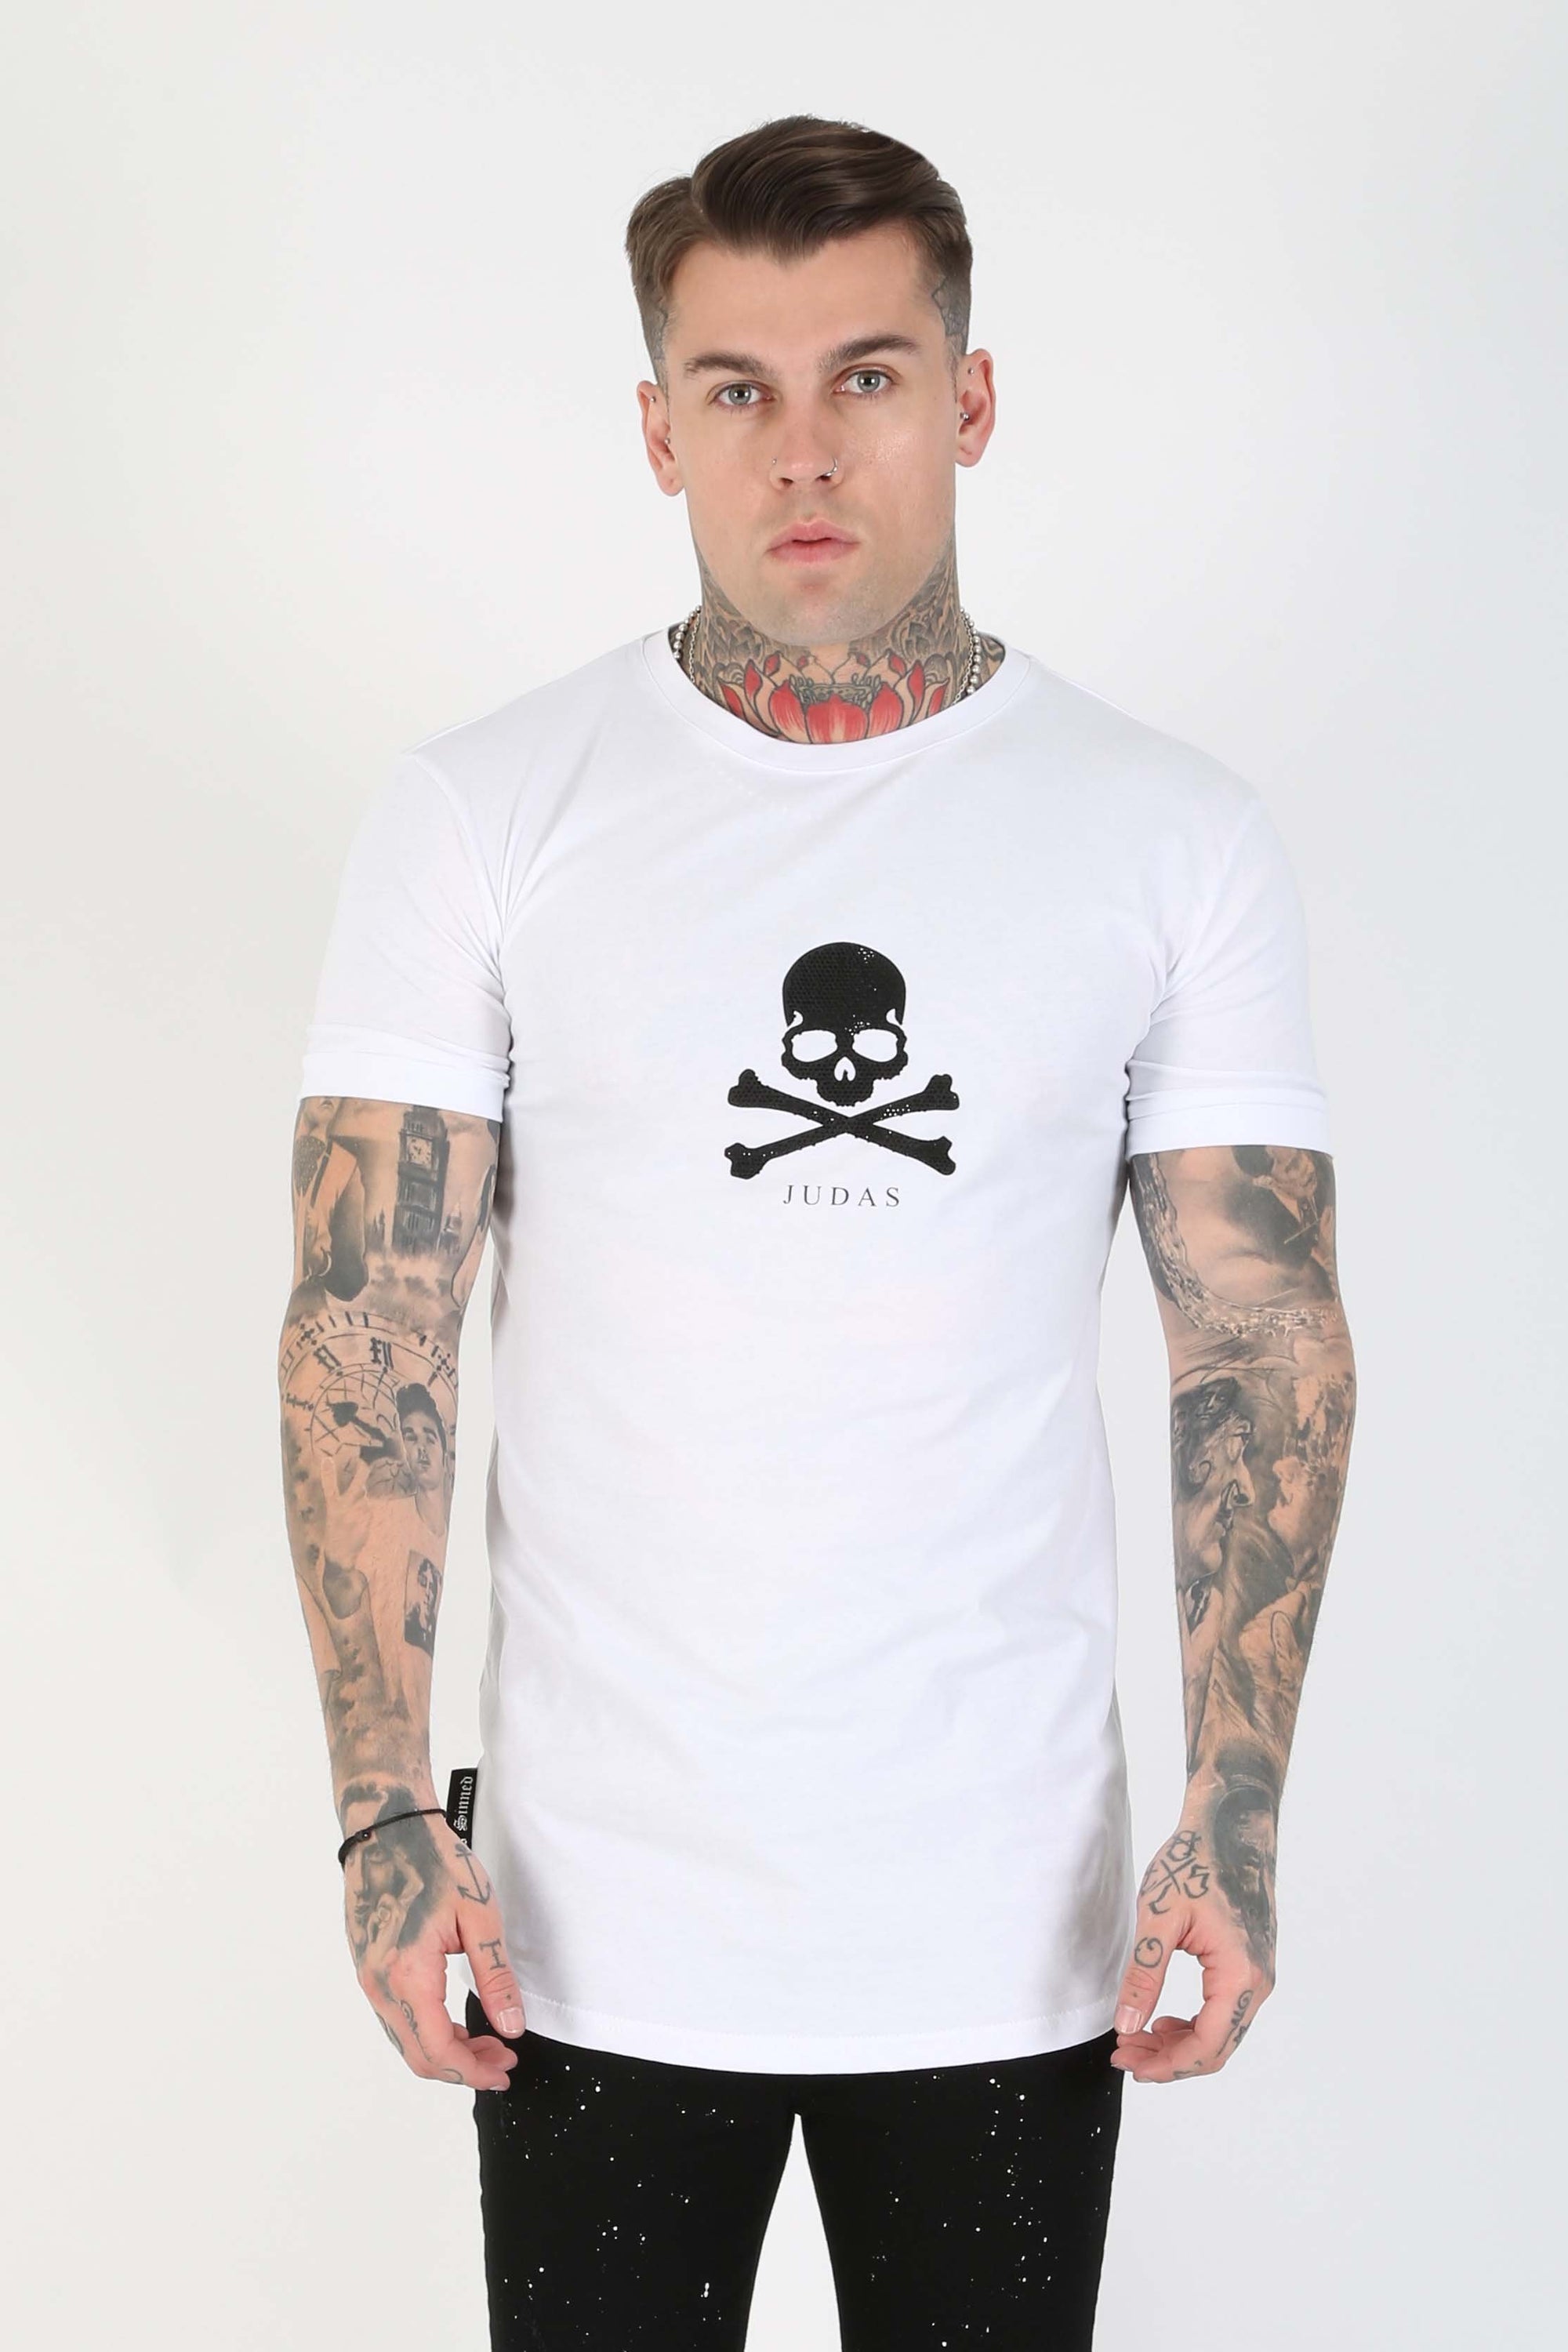 Edge Crystal Skull T-Shirt - White - Judas Sinned Clothing